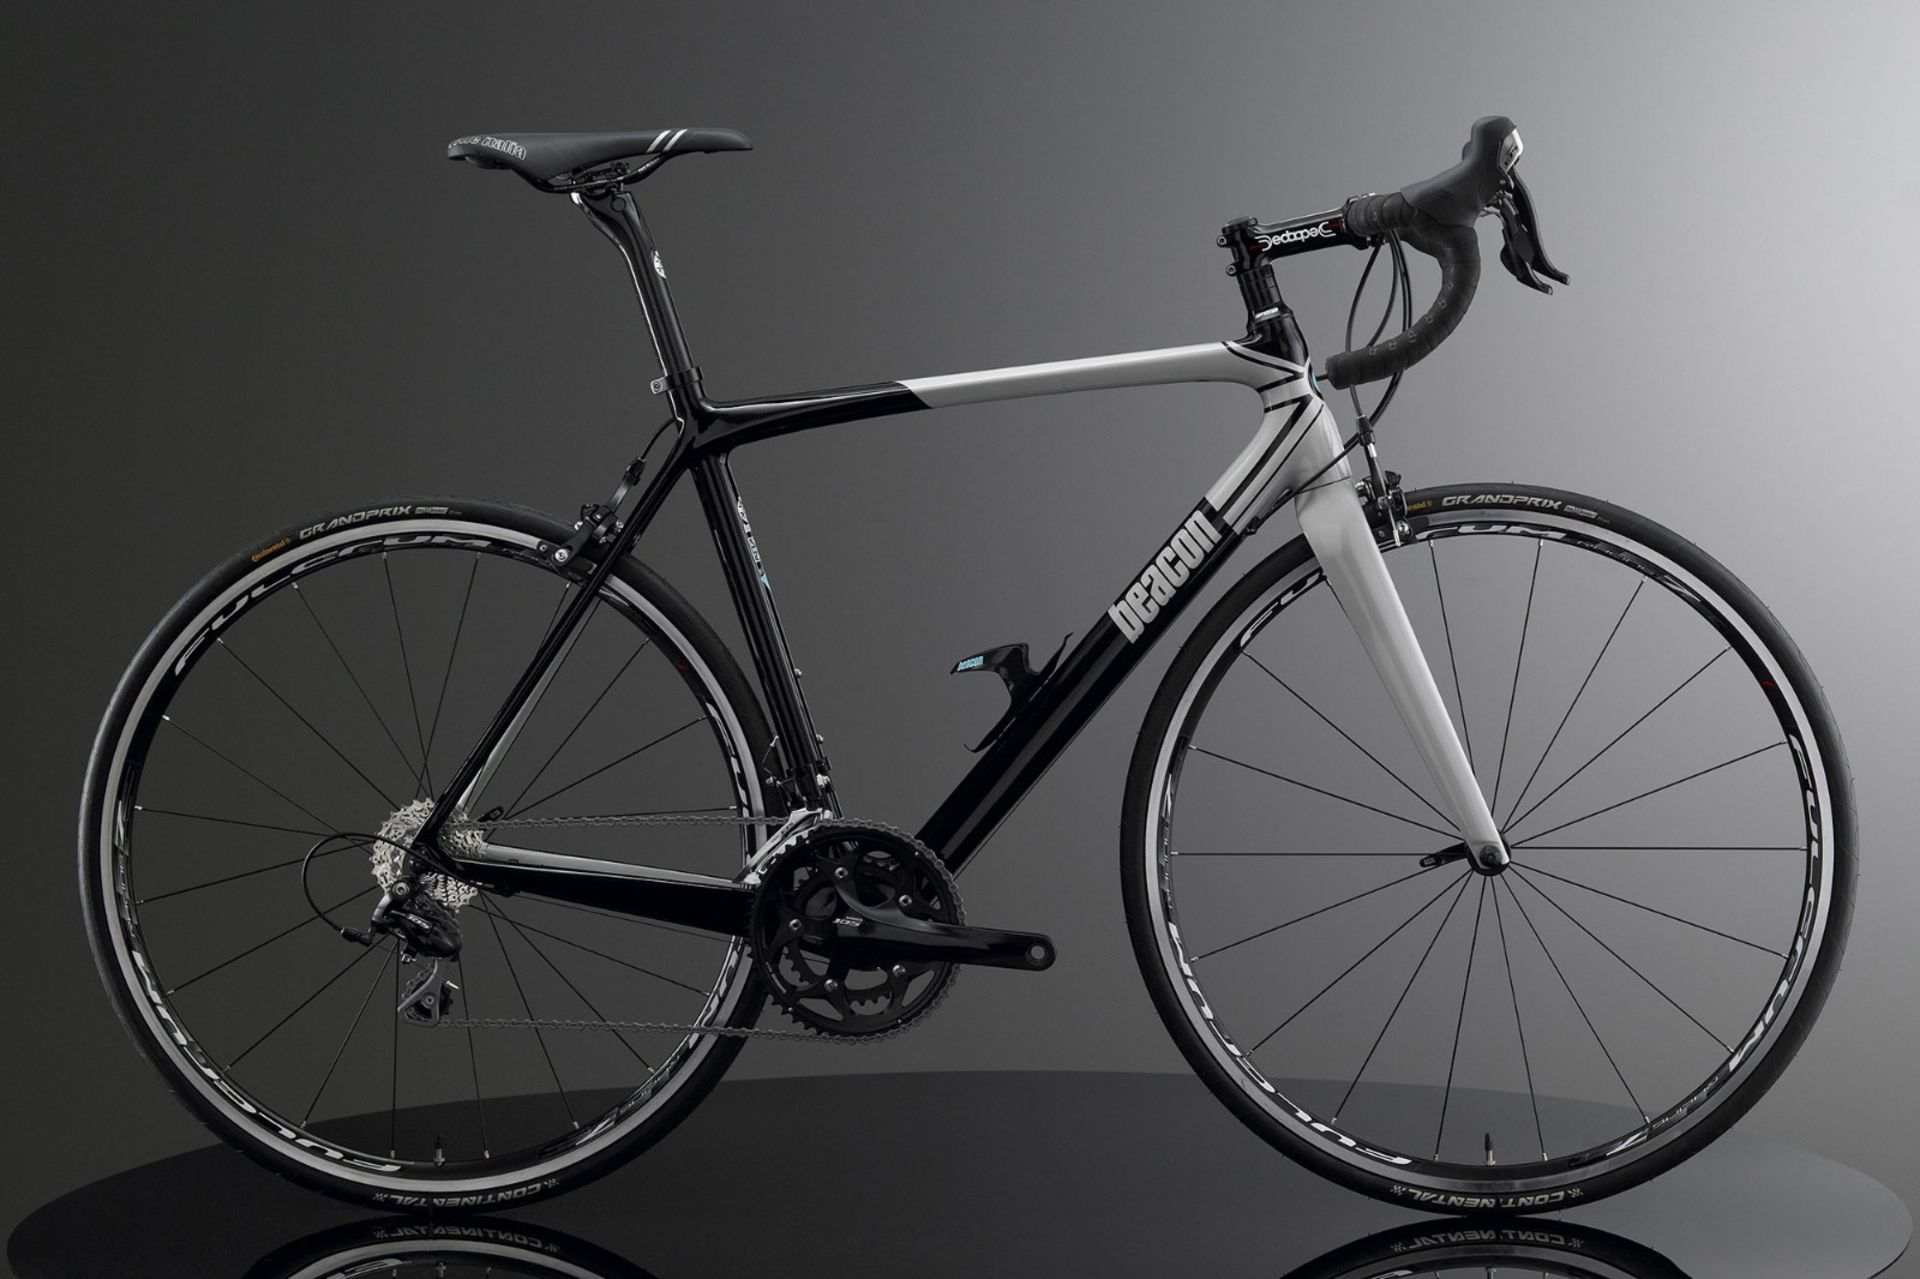 1 x Beacon Model BF-70, Size 490, Carbon Fibre Bike Frame in Black & Light Grey. - Image 2 of 3